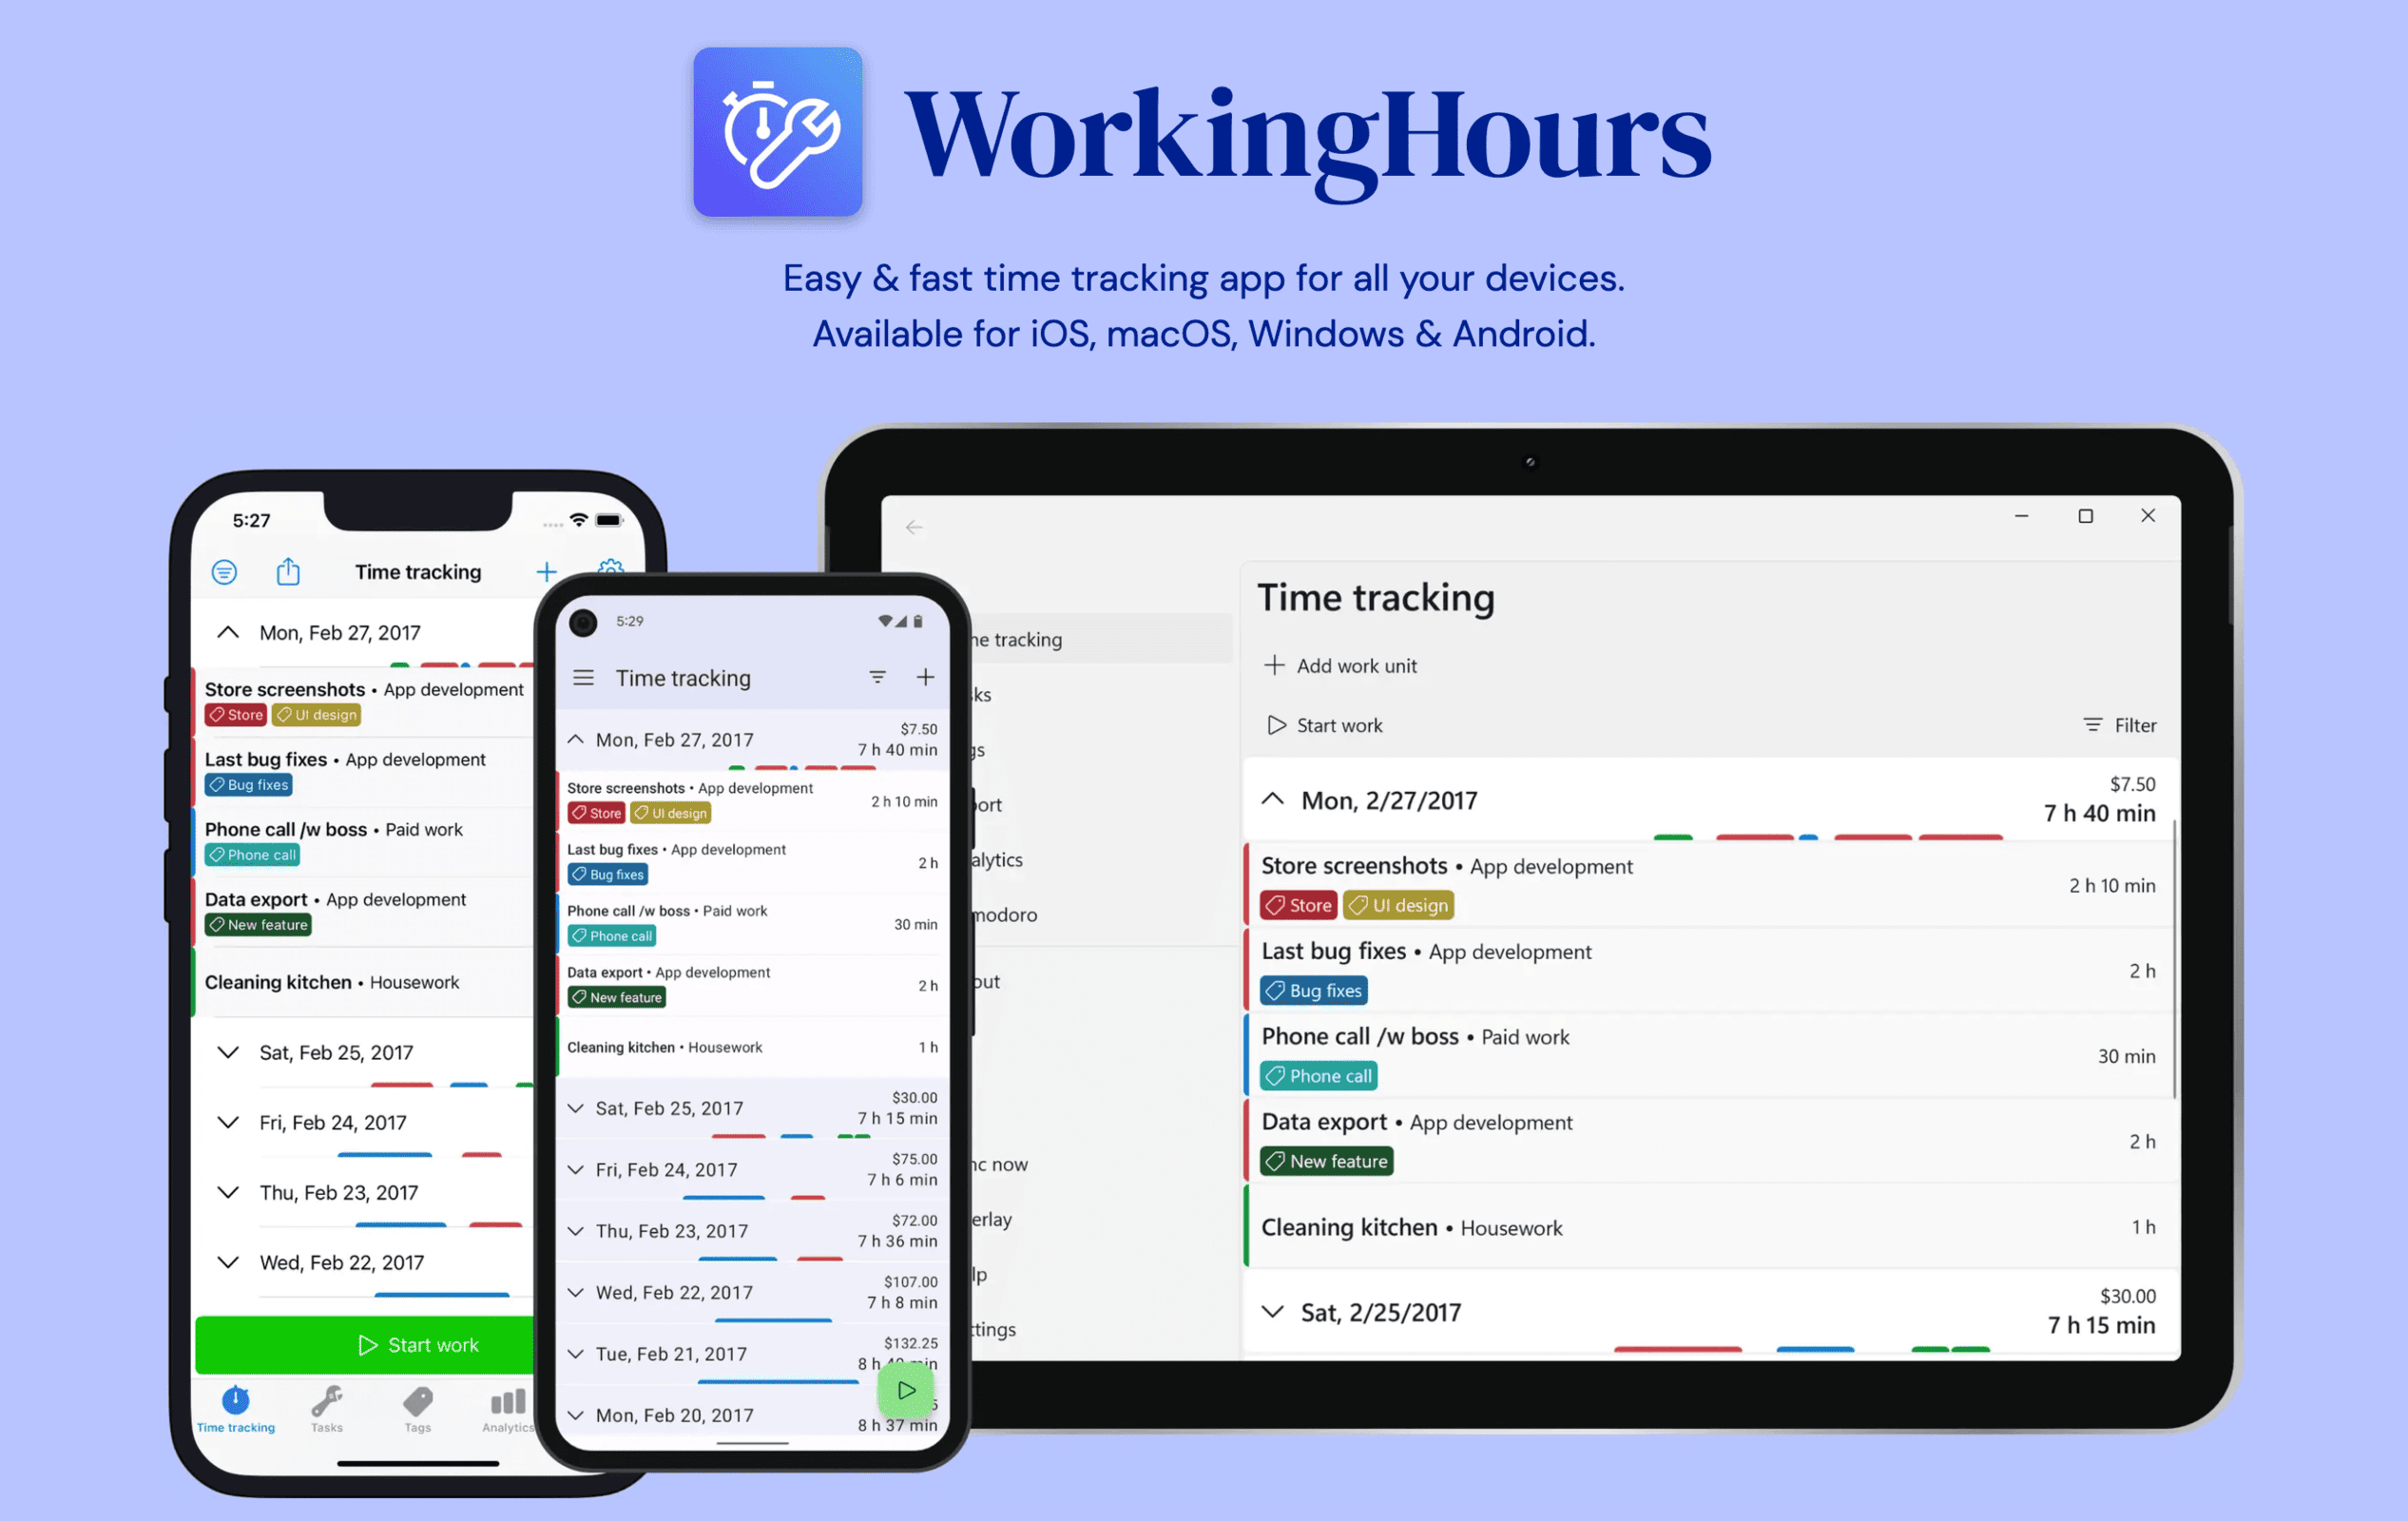 WorkingHours homepage